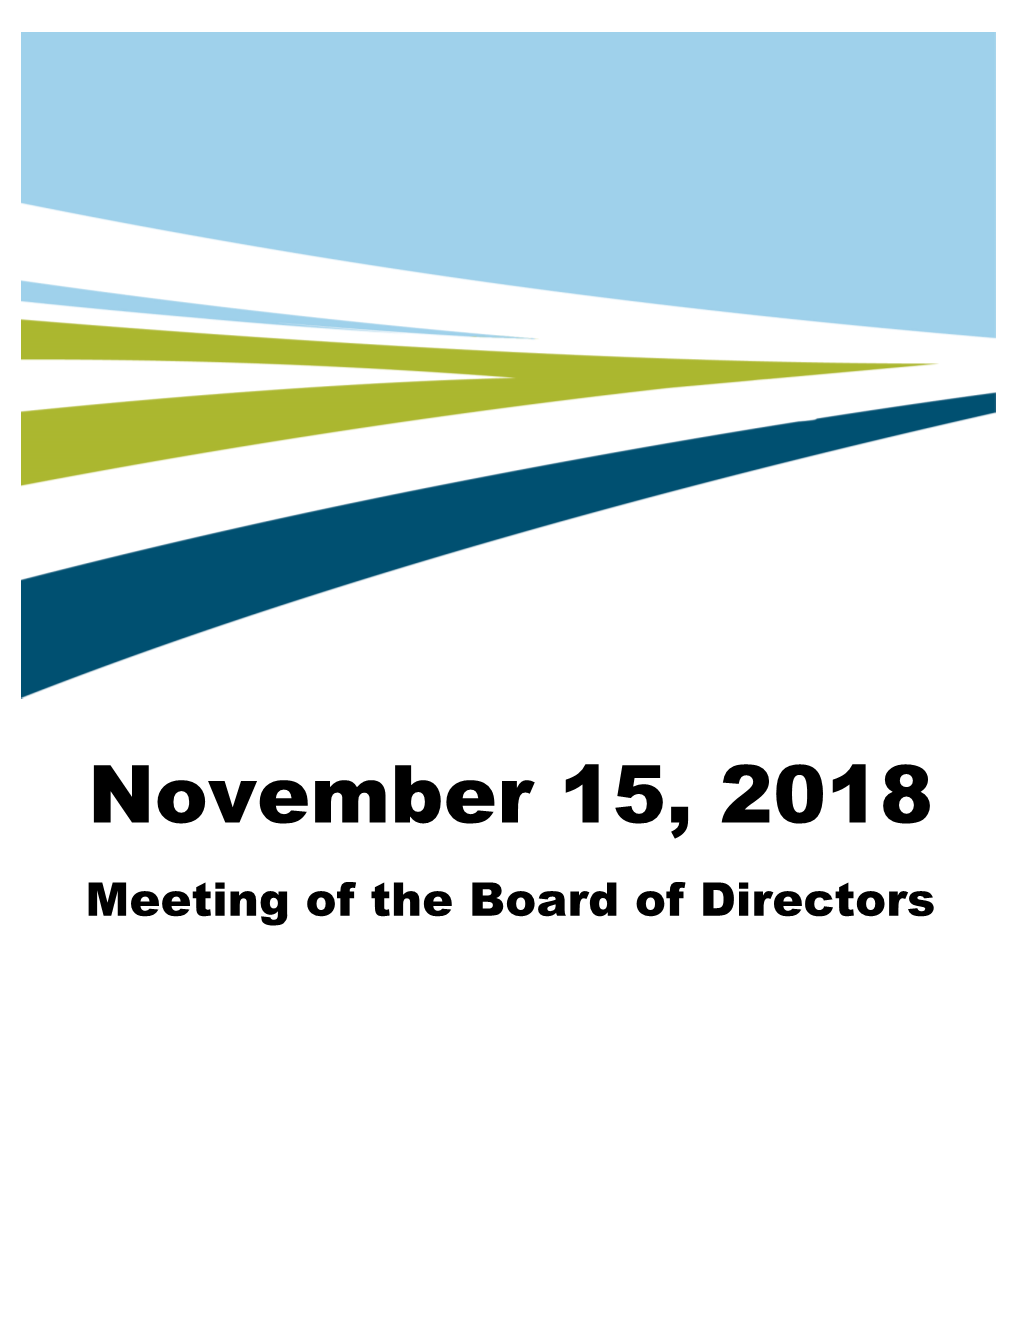 November 15, 2018 Meeting of the Board of Directors